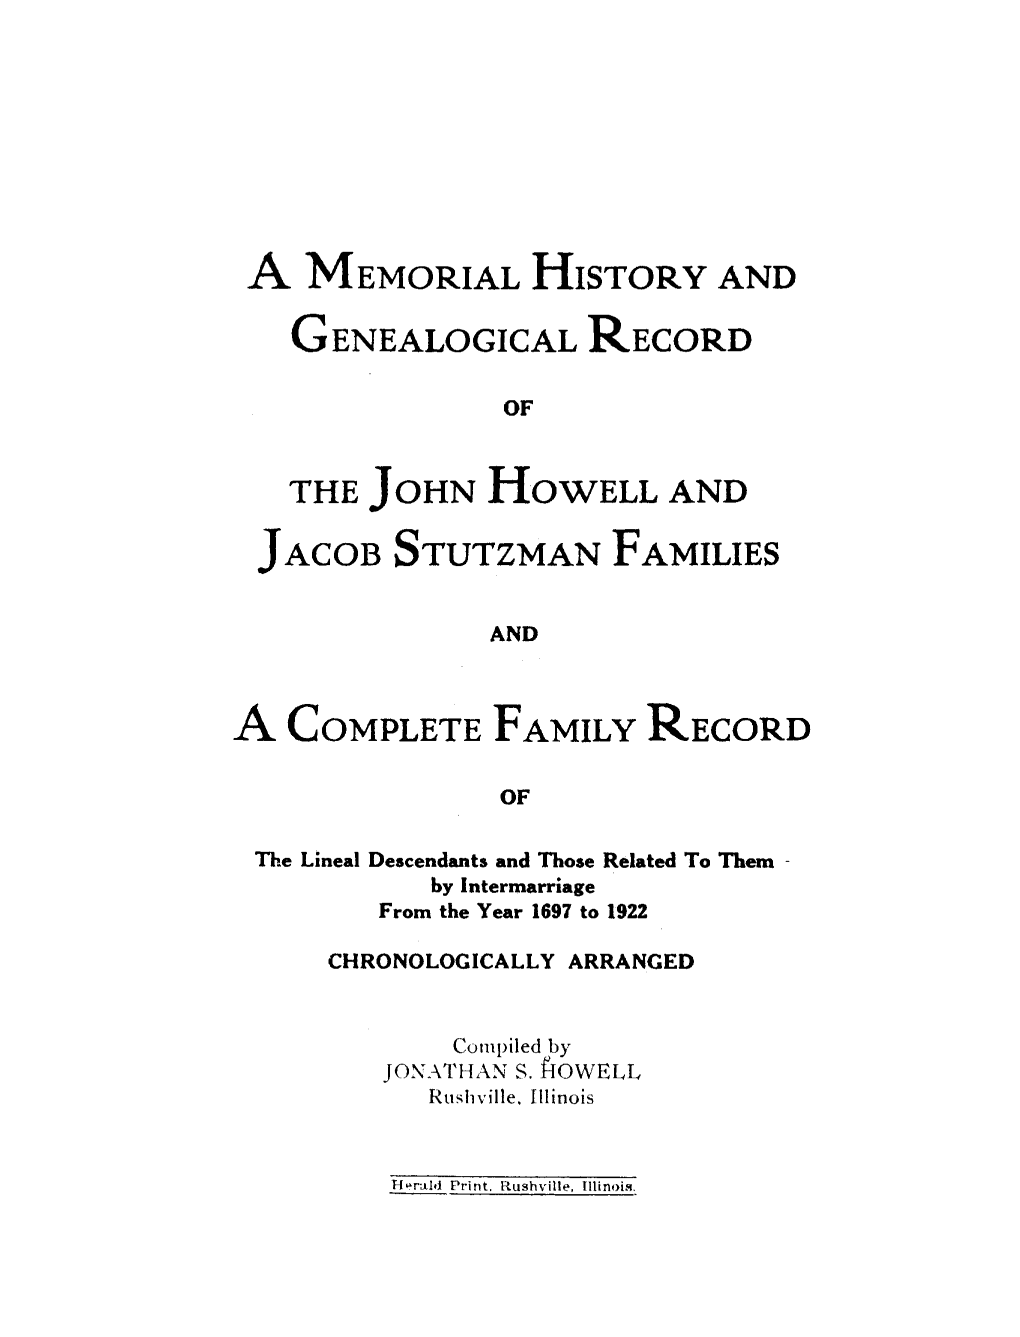 JOHN Howell and JACOB STUTZMAN FAMILIES